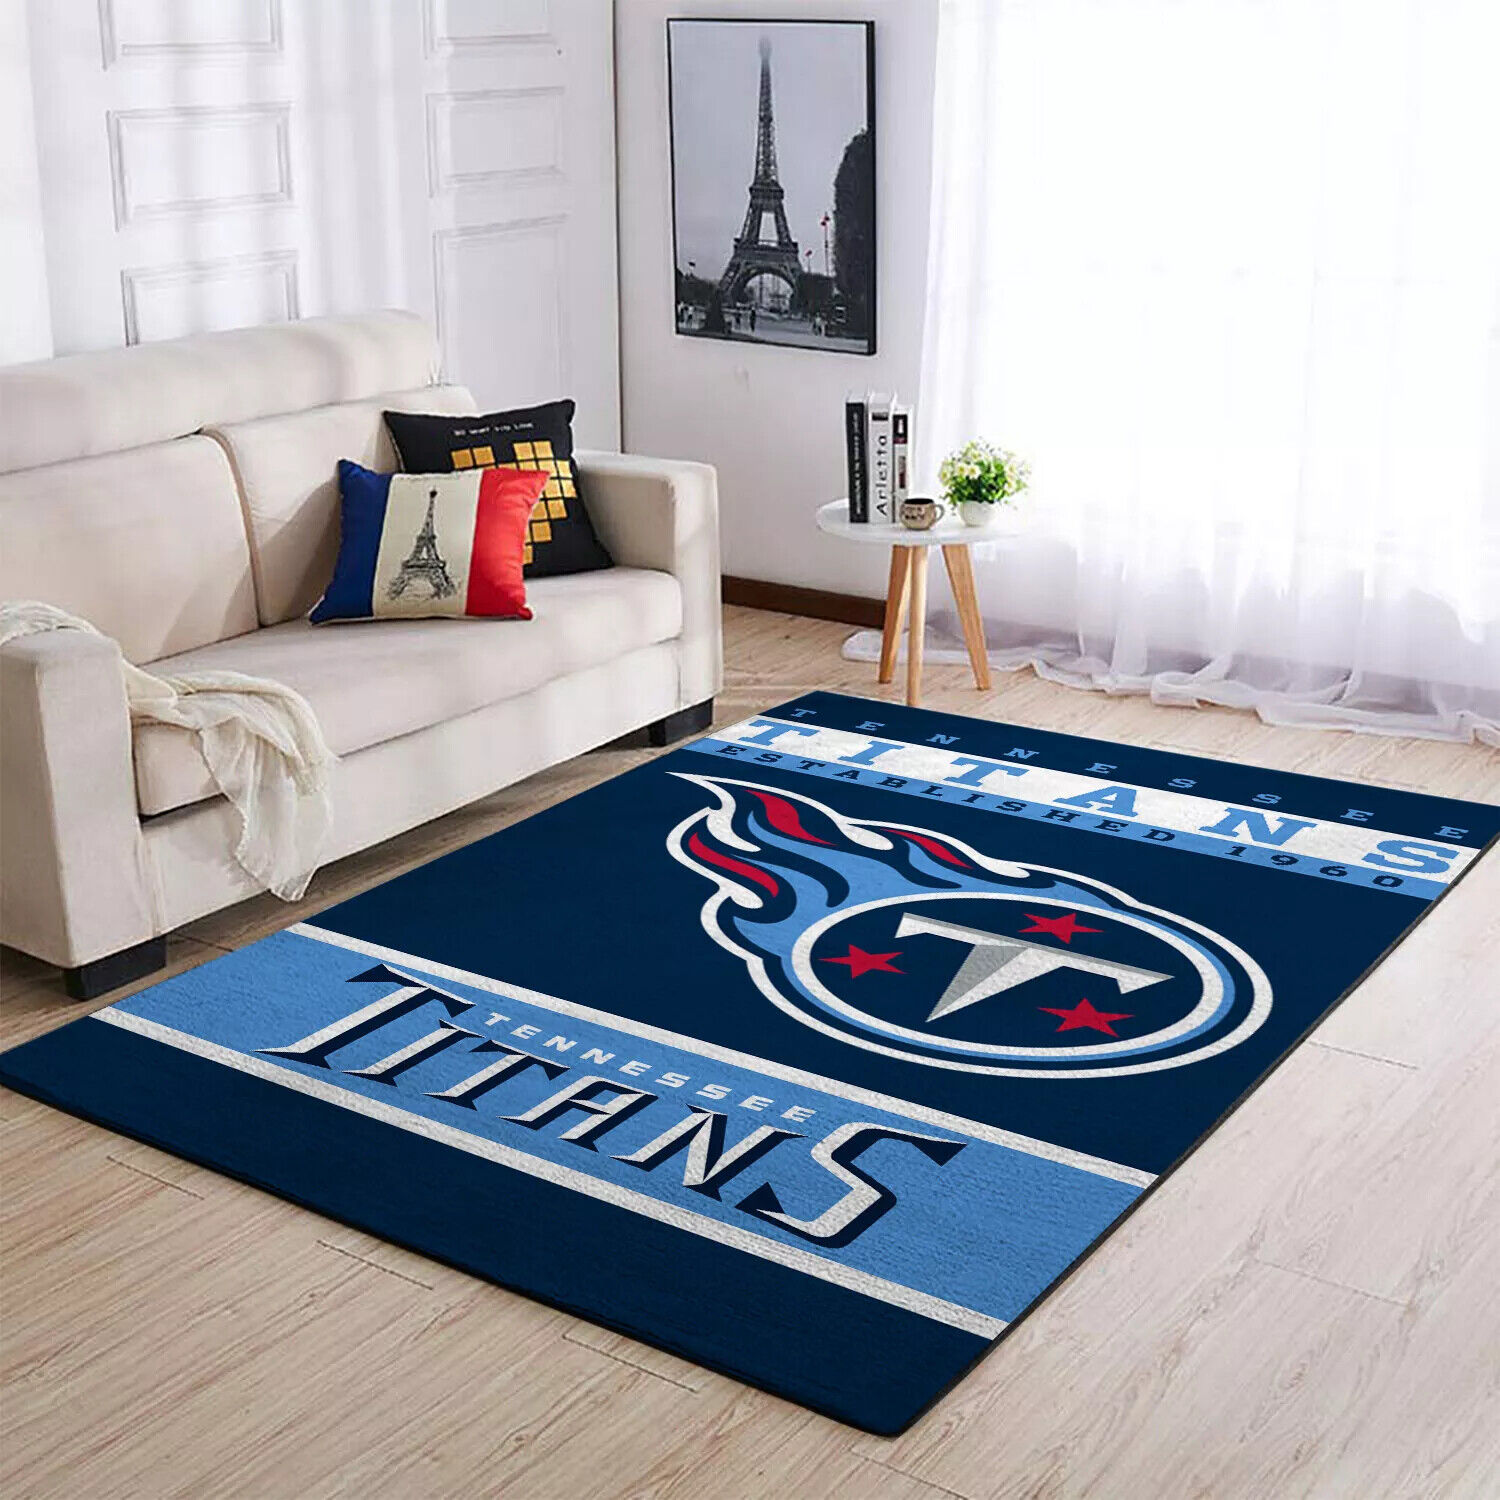 Tennessee Titans Anti-Skid Area Rugs Fans Living Room Bedroom Floor Mats Carpets Ograniczona SPRZEDAŻ, bardzo popularna